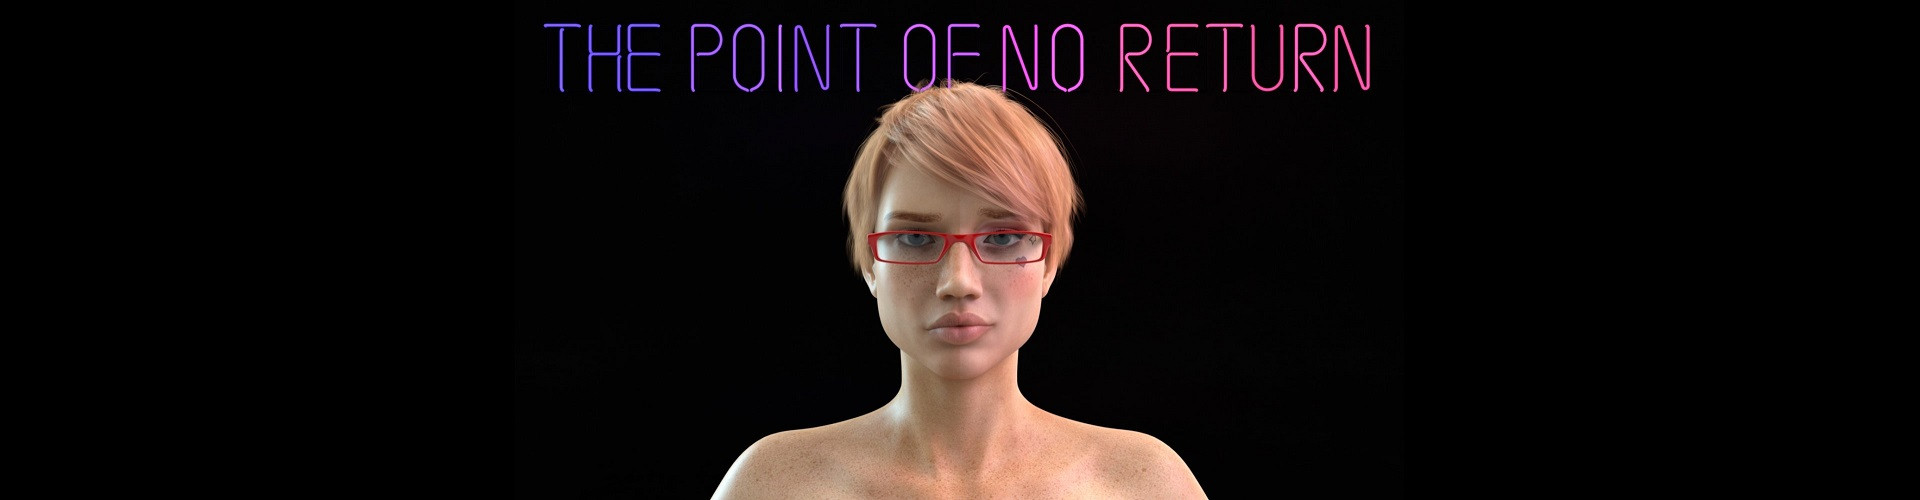 The Point of No Return [InProgress, v0.45] - 7.58 GB